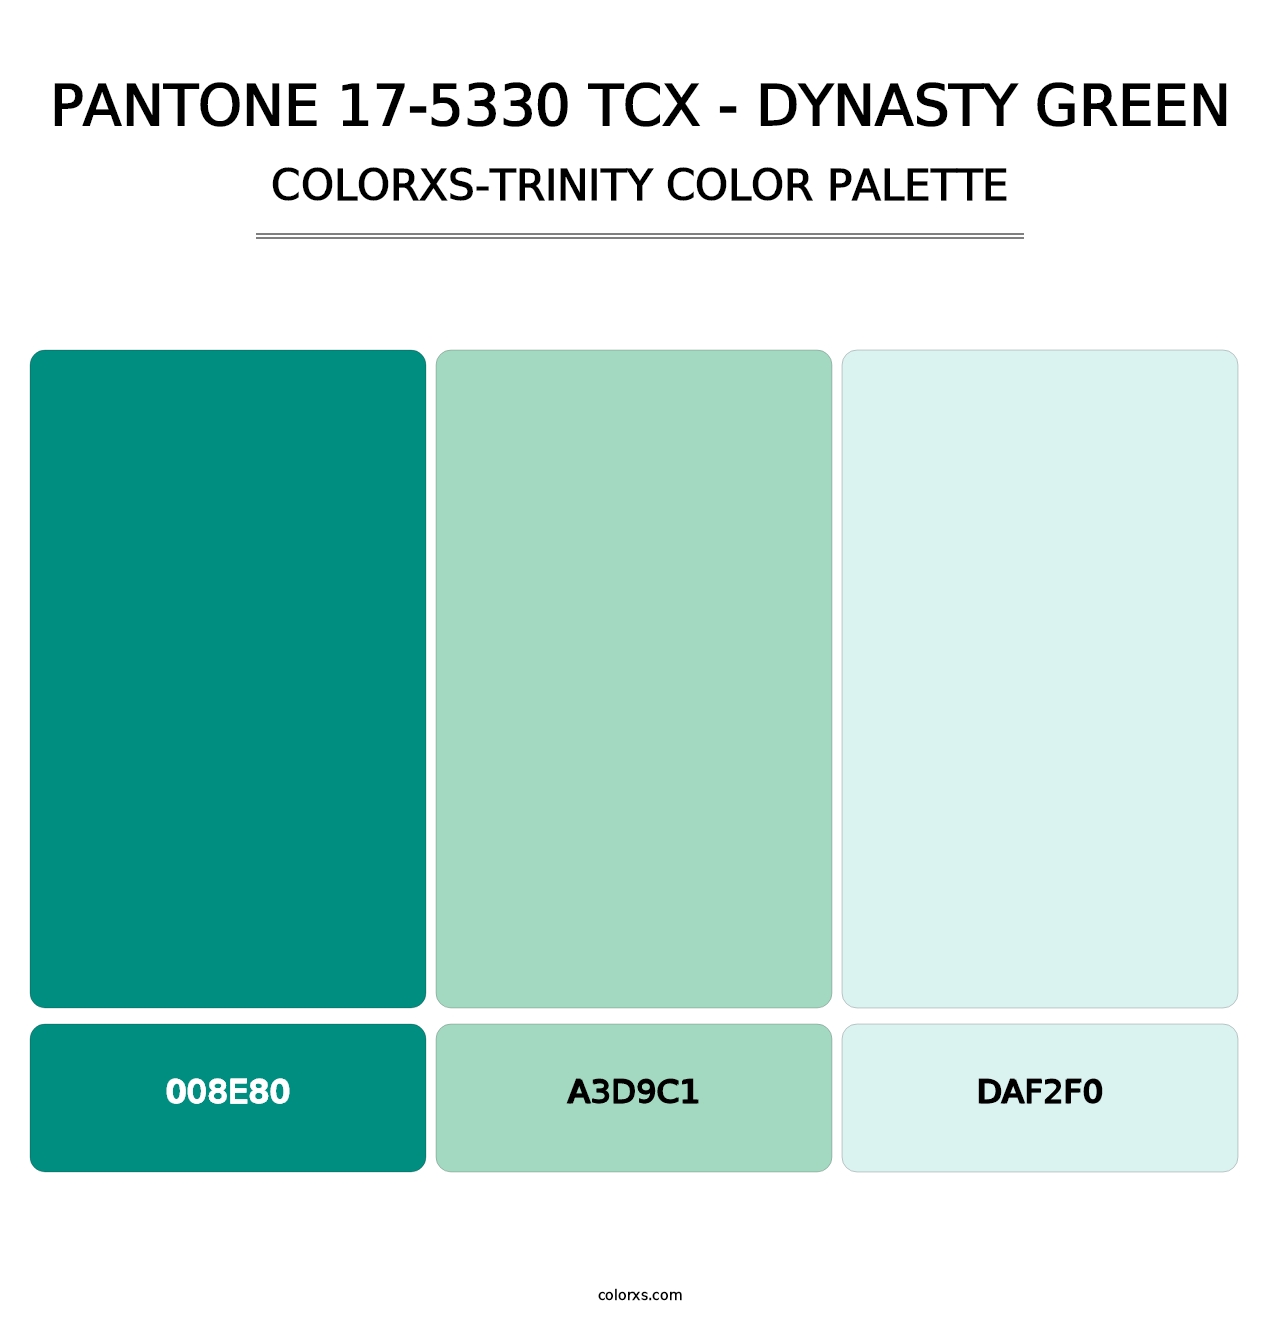 PANTONE 17-5330 TCX - Dynasty Green - Colorxs Trinity Palette